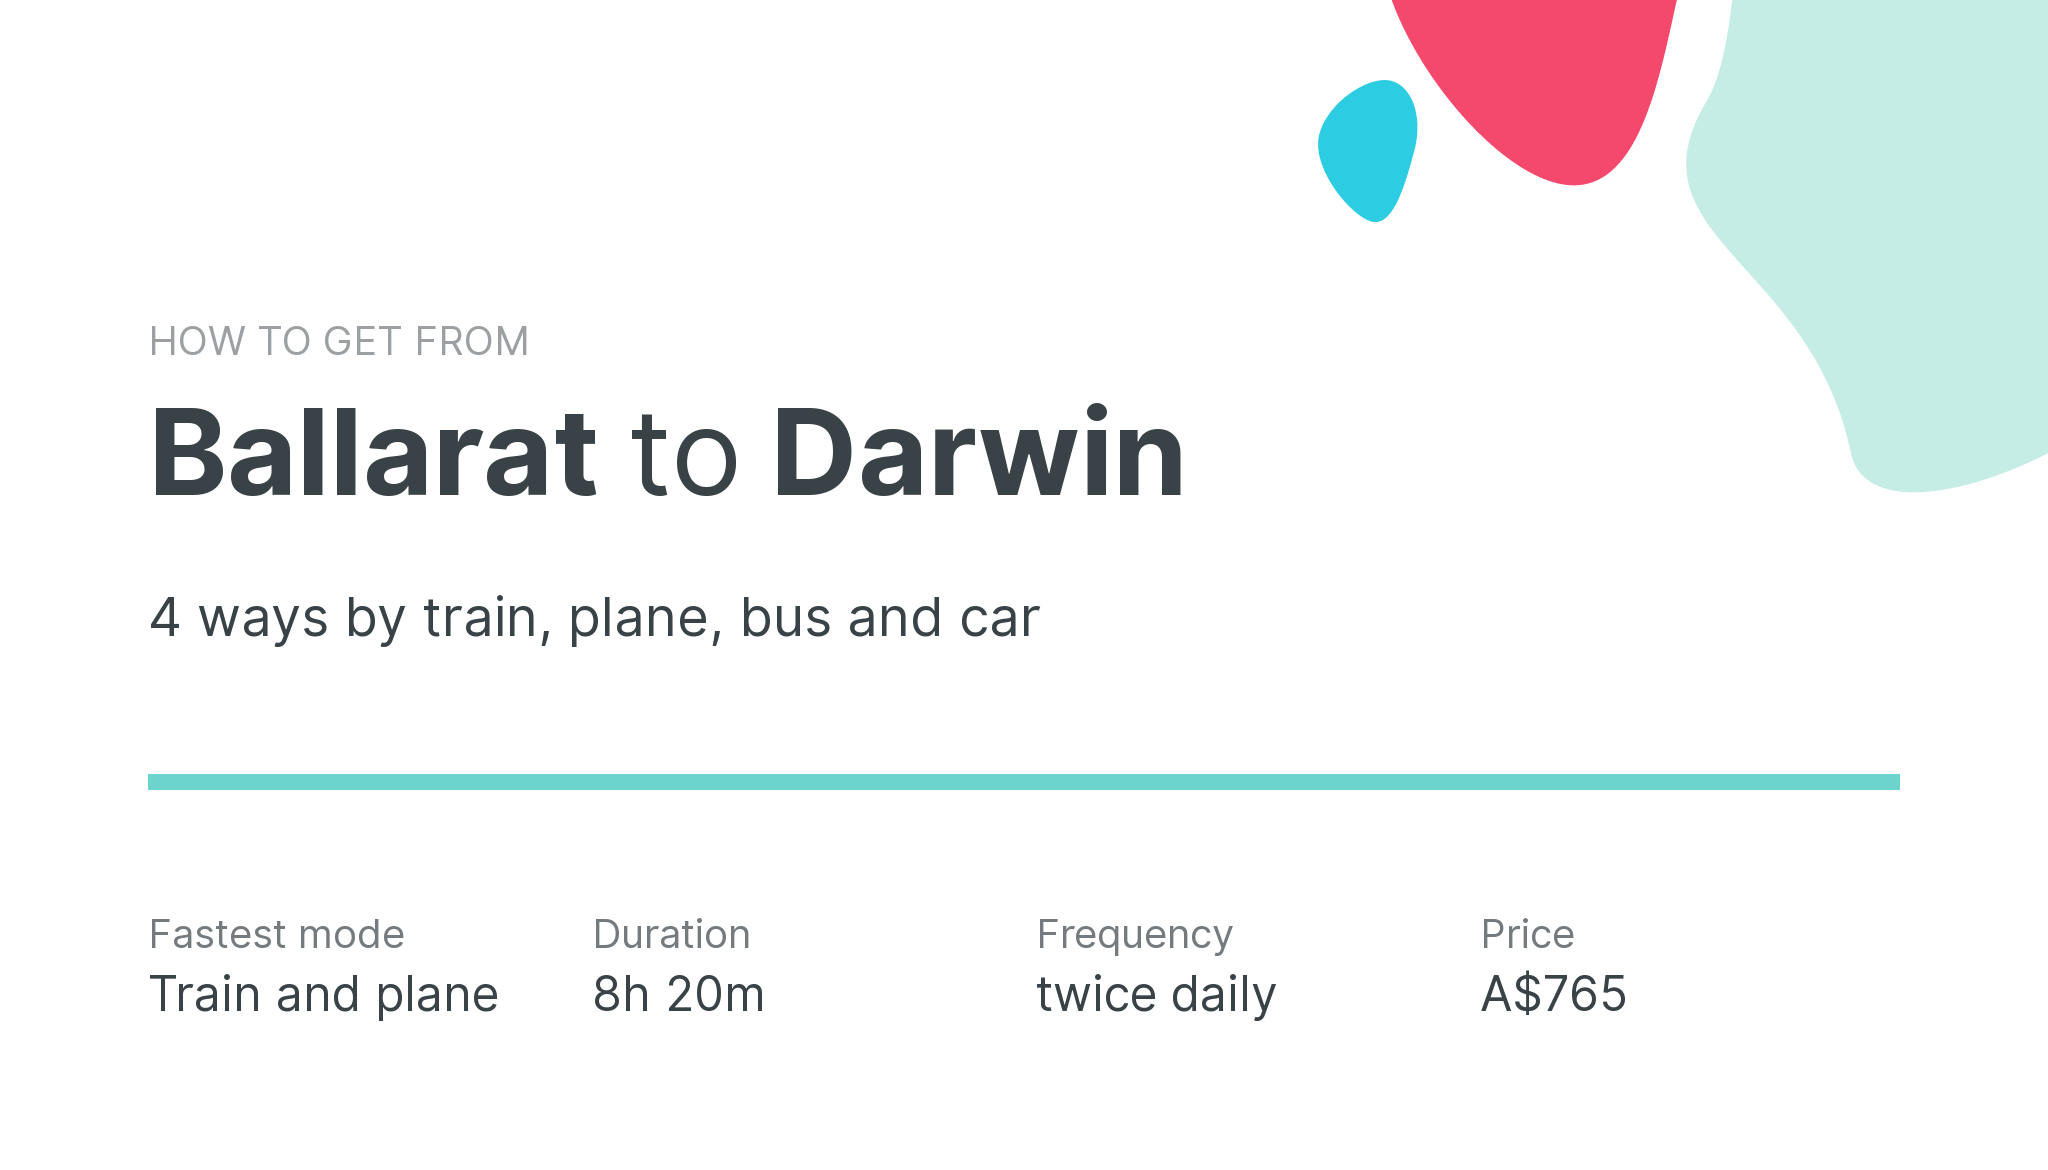 How do I get from Ballarat to Darwin